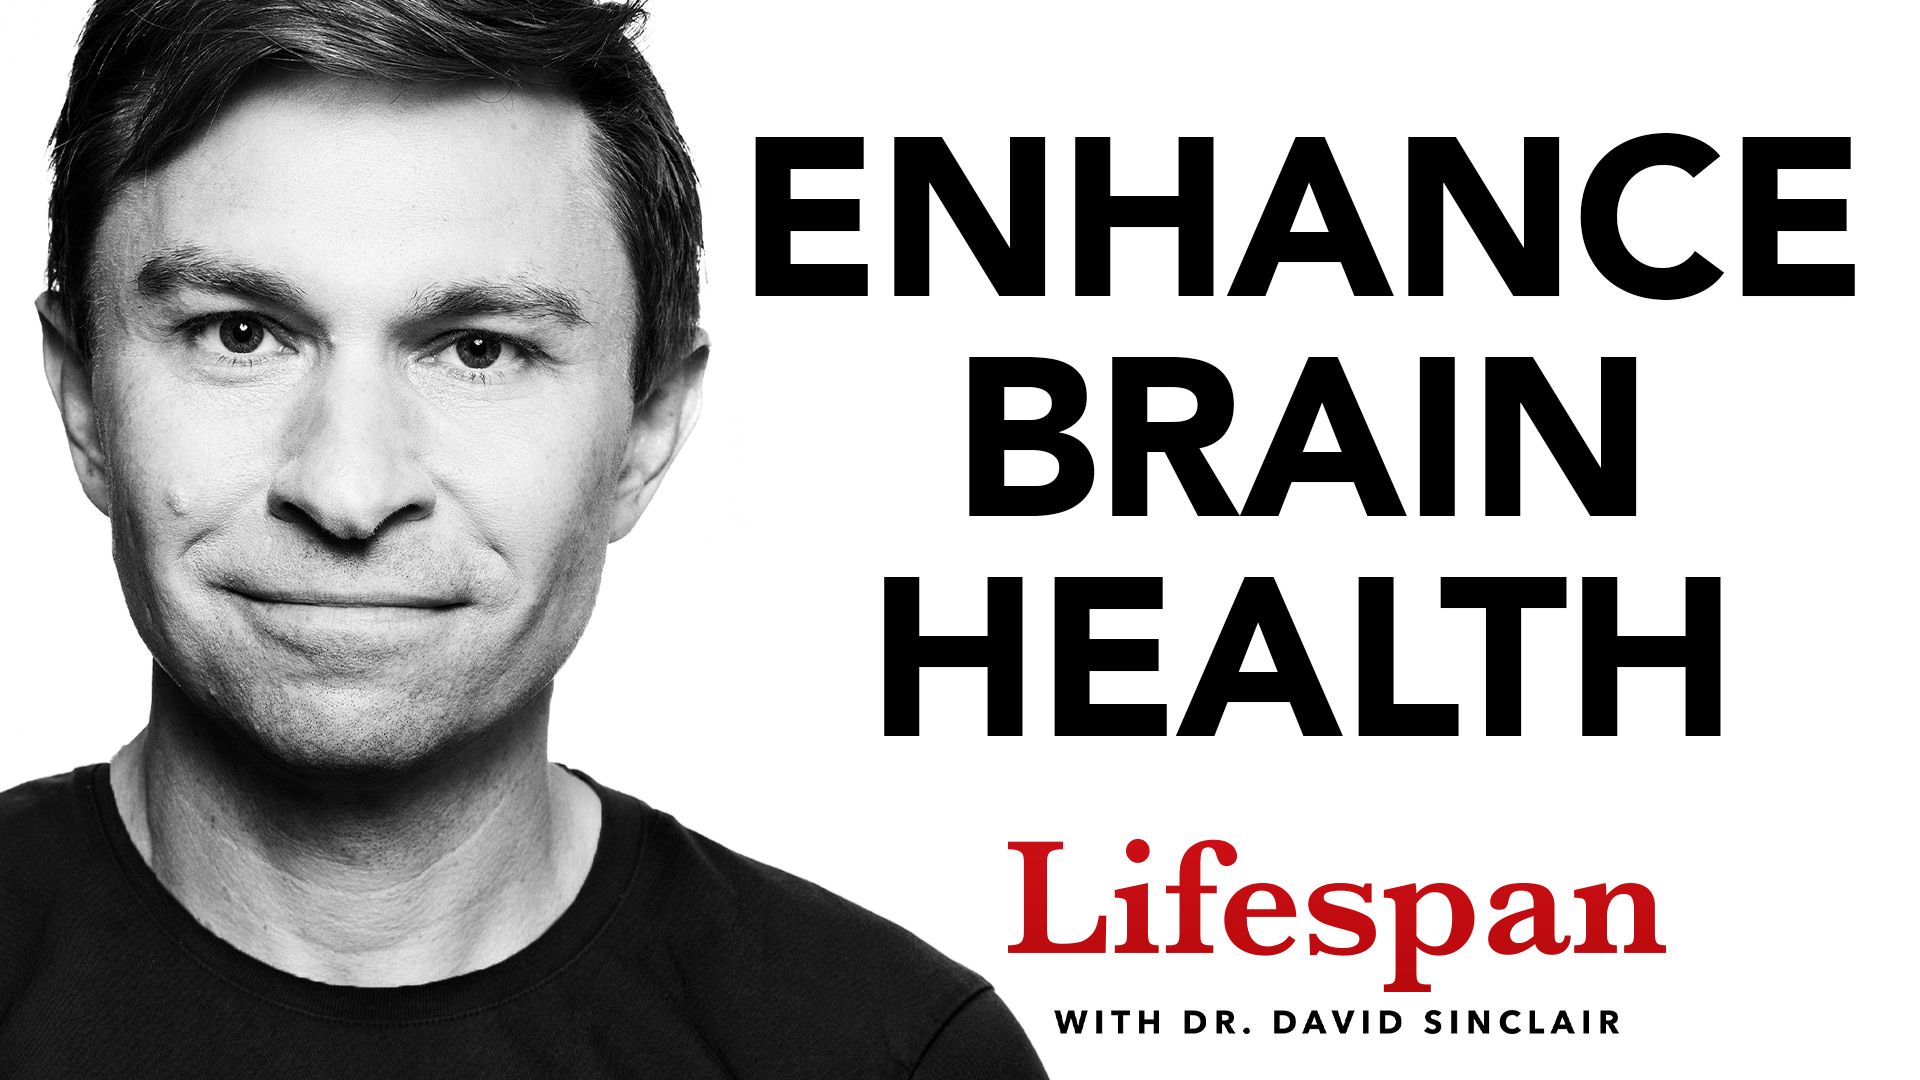 "Enhance Brain Health - Lifespan with Dr. David Sinclair"